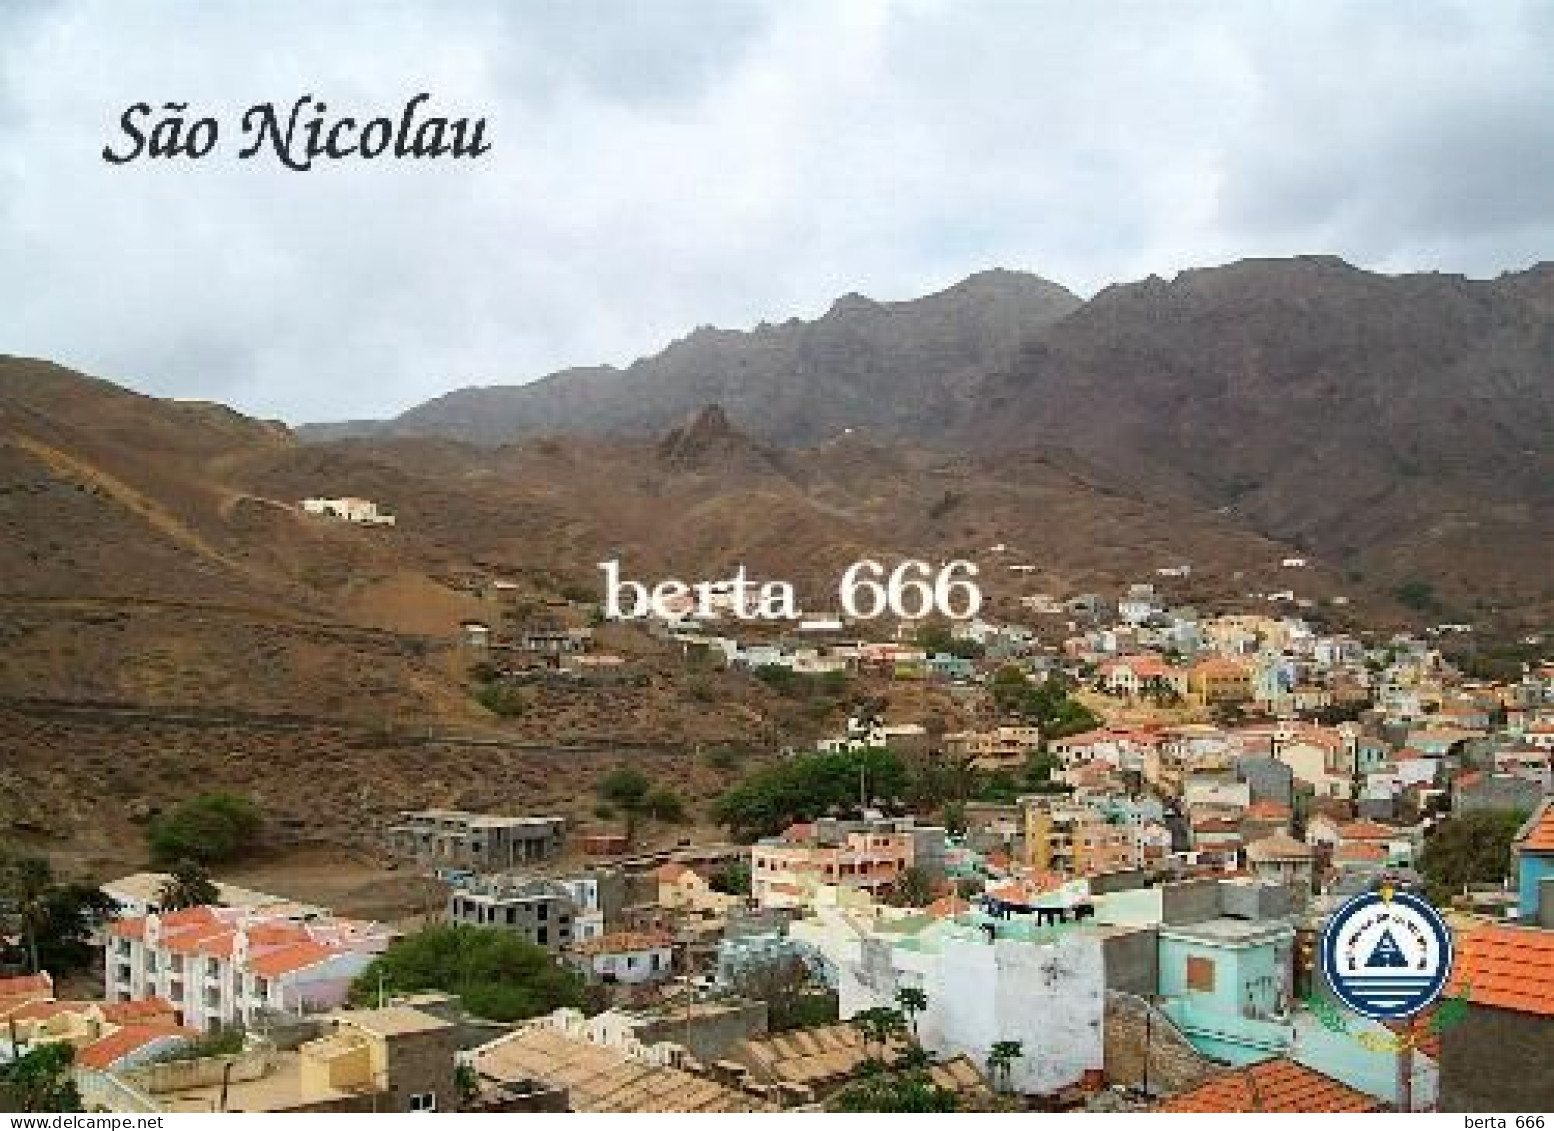 Cape Verde Sao Nicolau Island New Postcard - Cape Verde